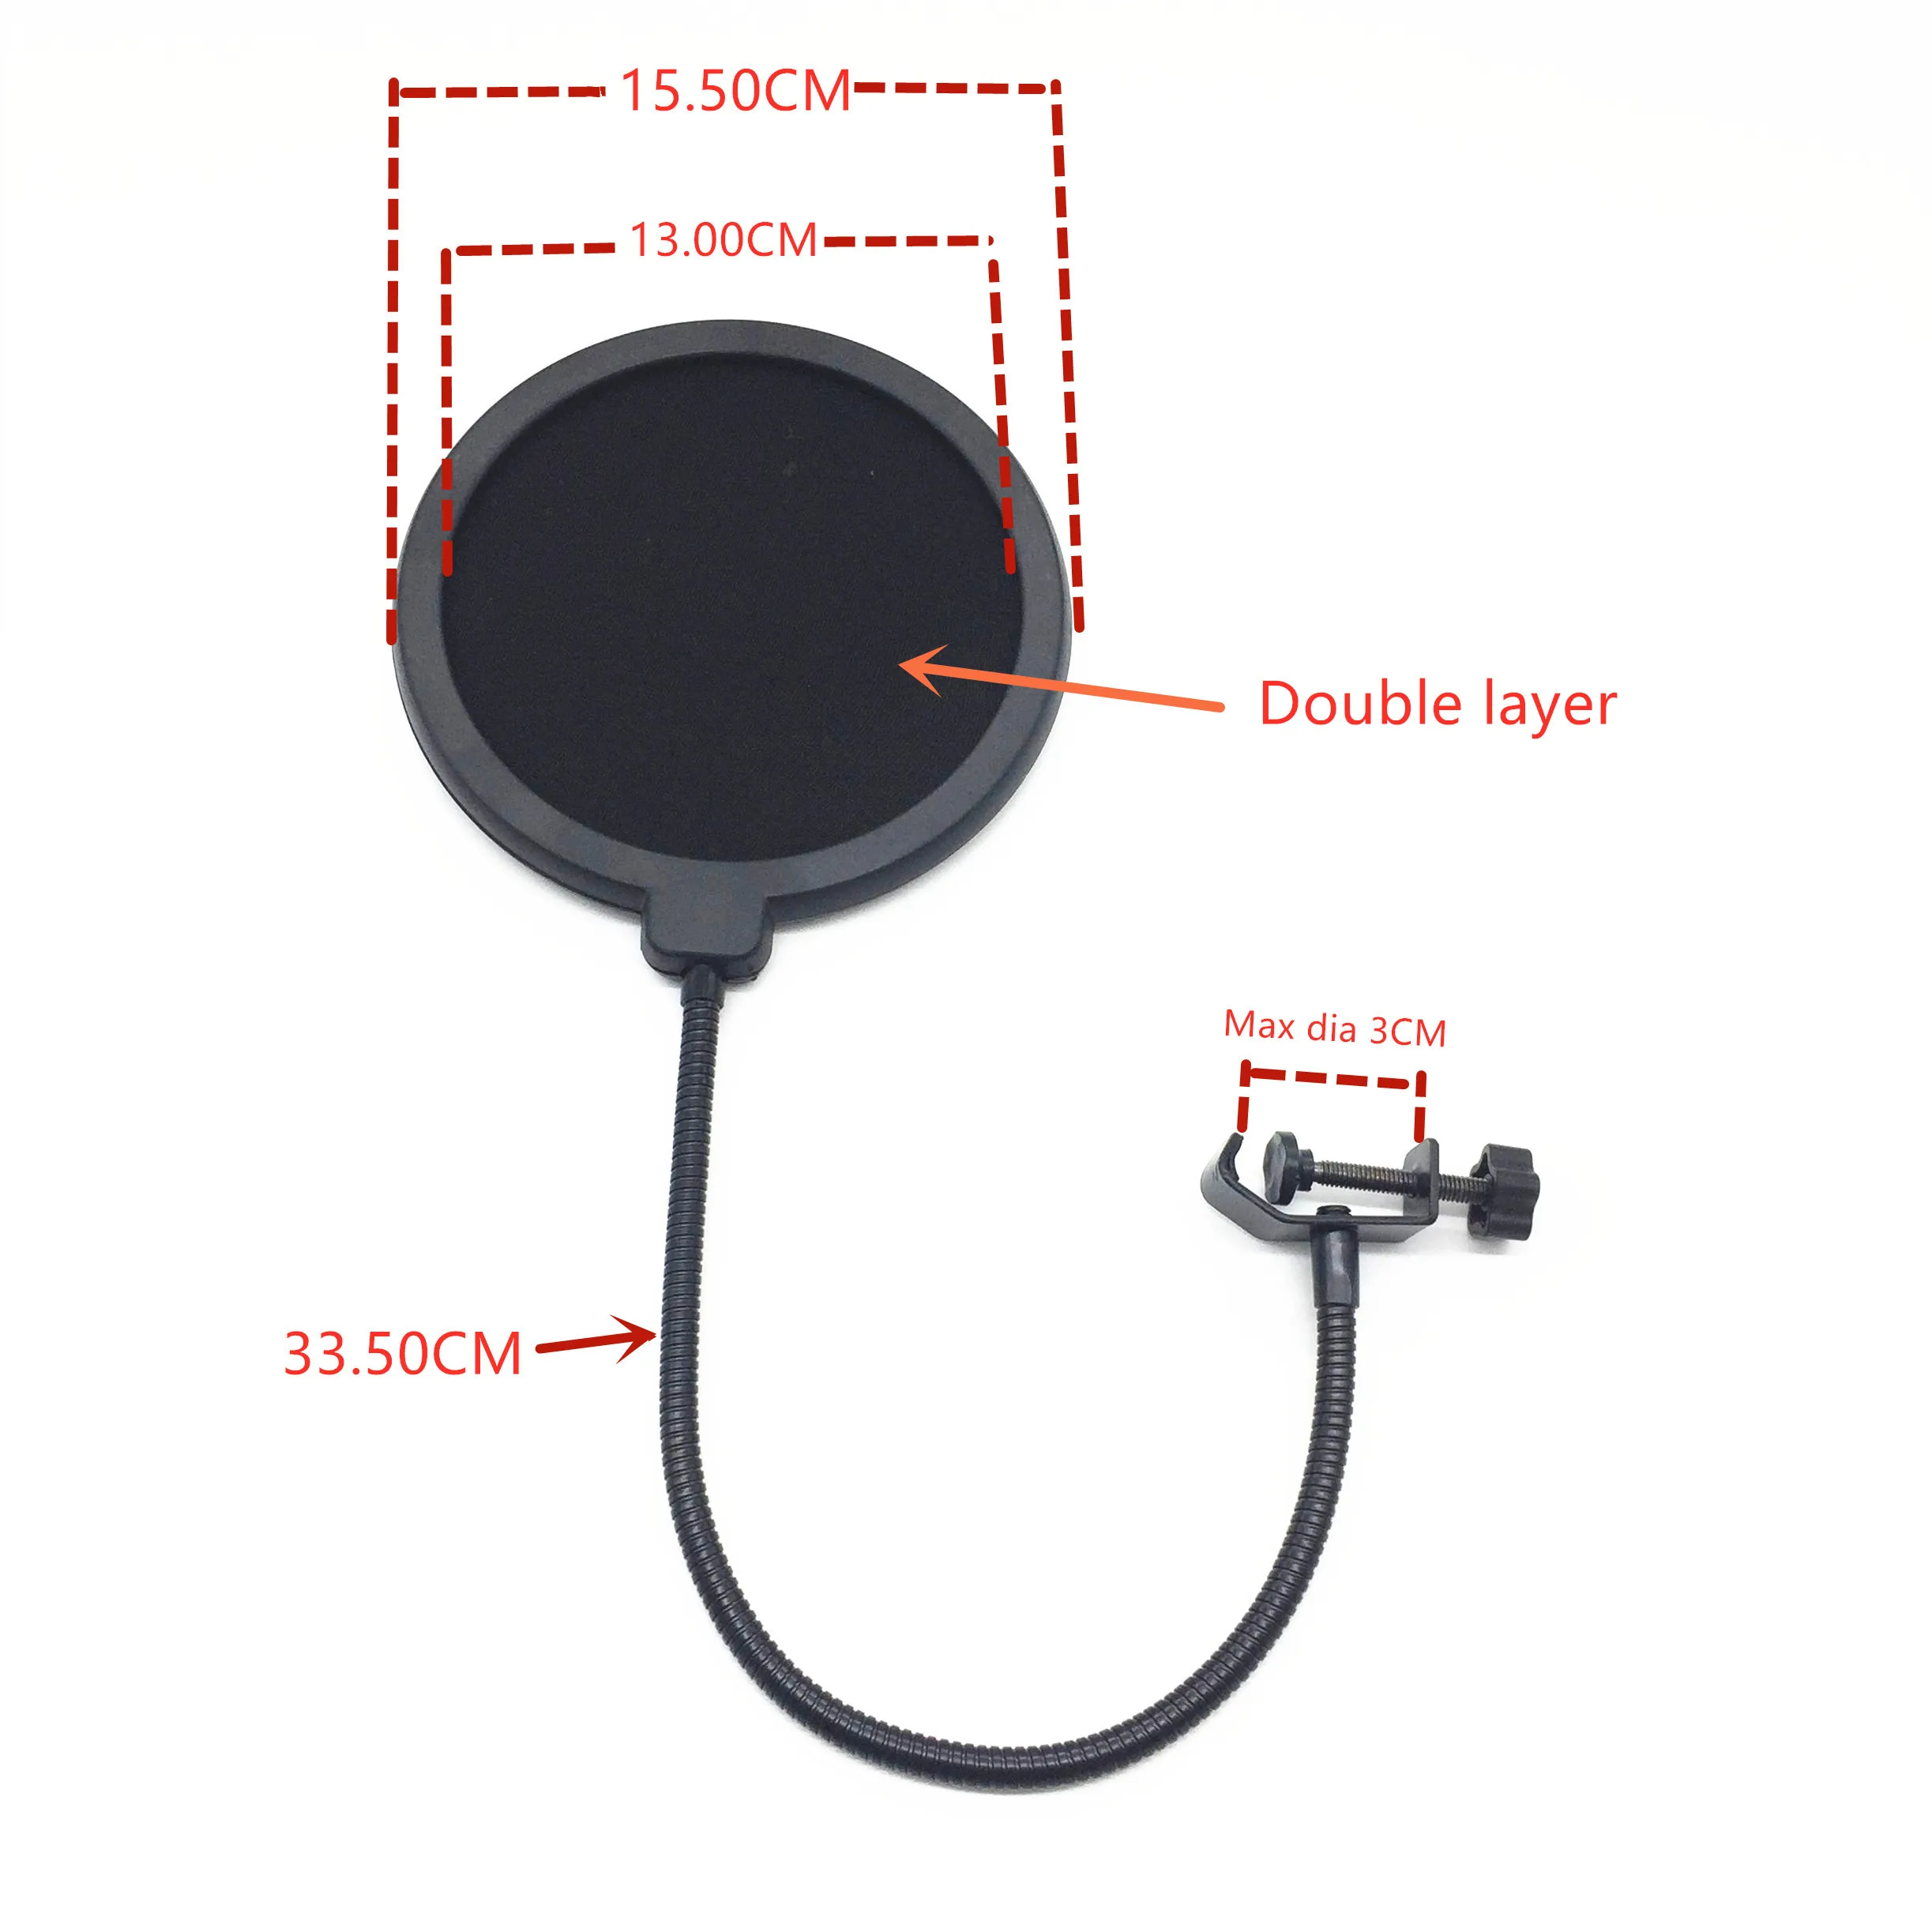 

Blue Mantis Black Double Layer Studio Microphone Windscreen Pop Filter For Speaking Recorder Pop Filter For Broadcast Online